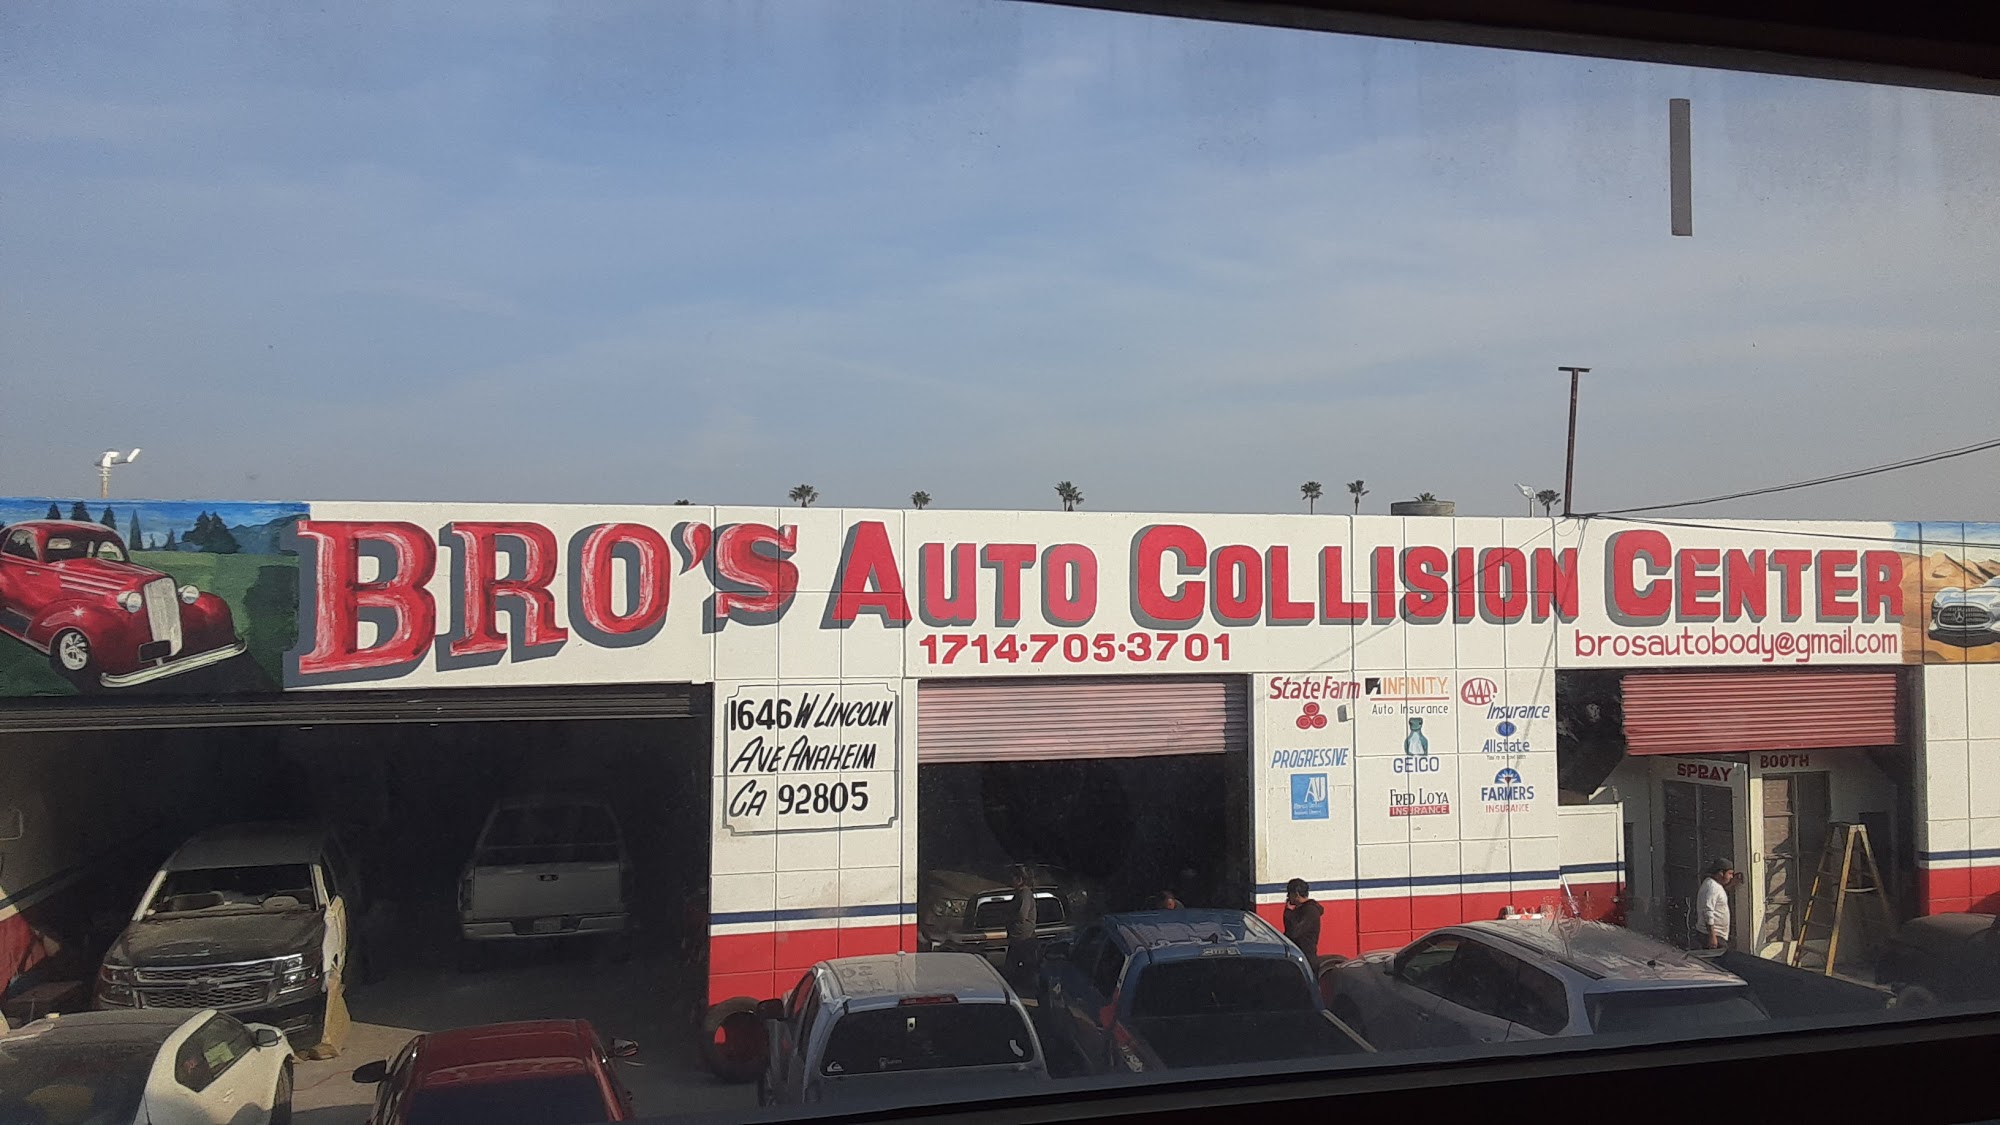 Bros Auto Collision Center